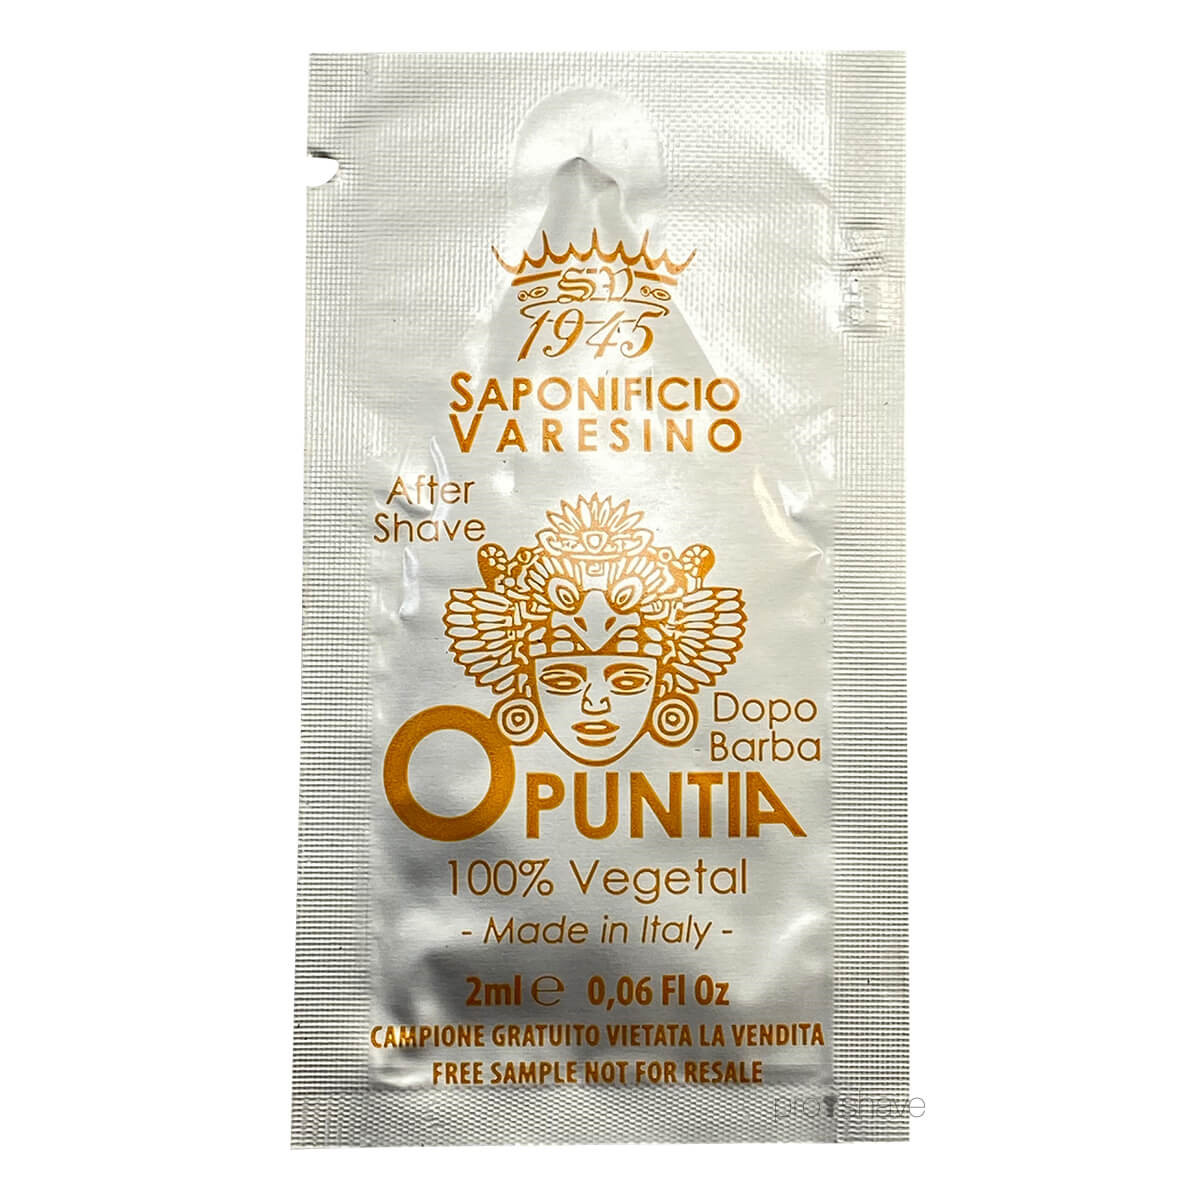 Saponificio Varesino Aftershave, Opuntia, SAMPLE, 2 ml.